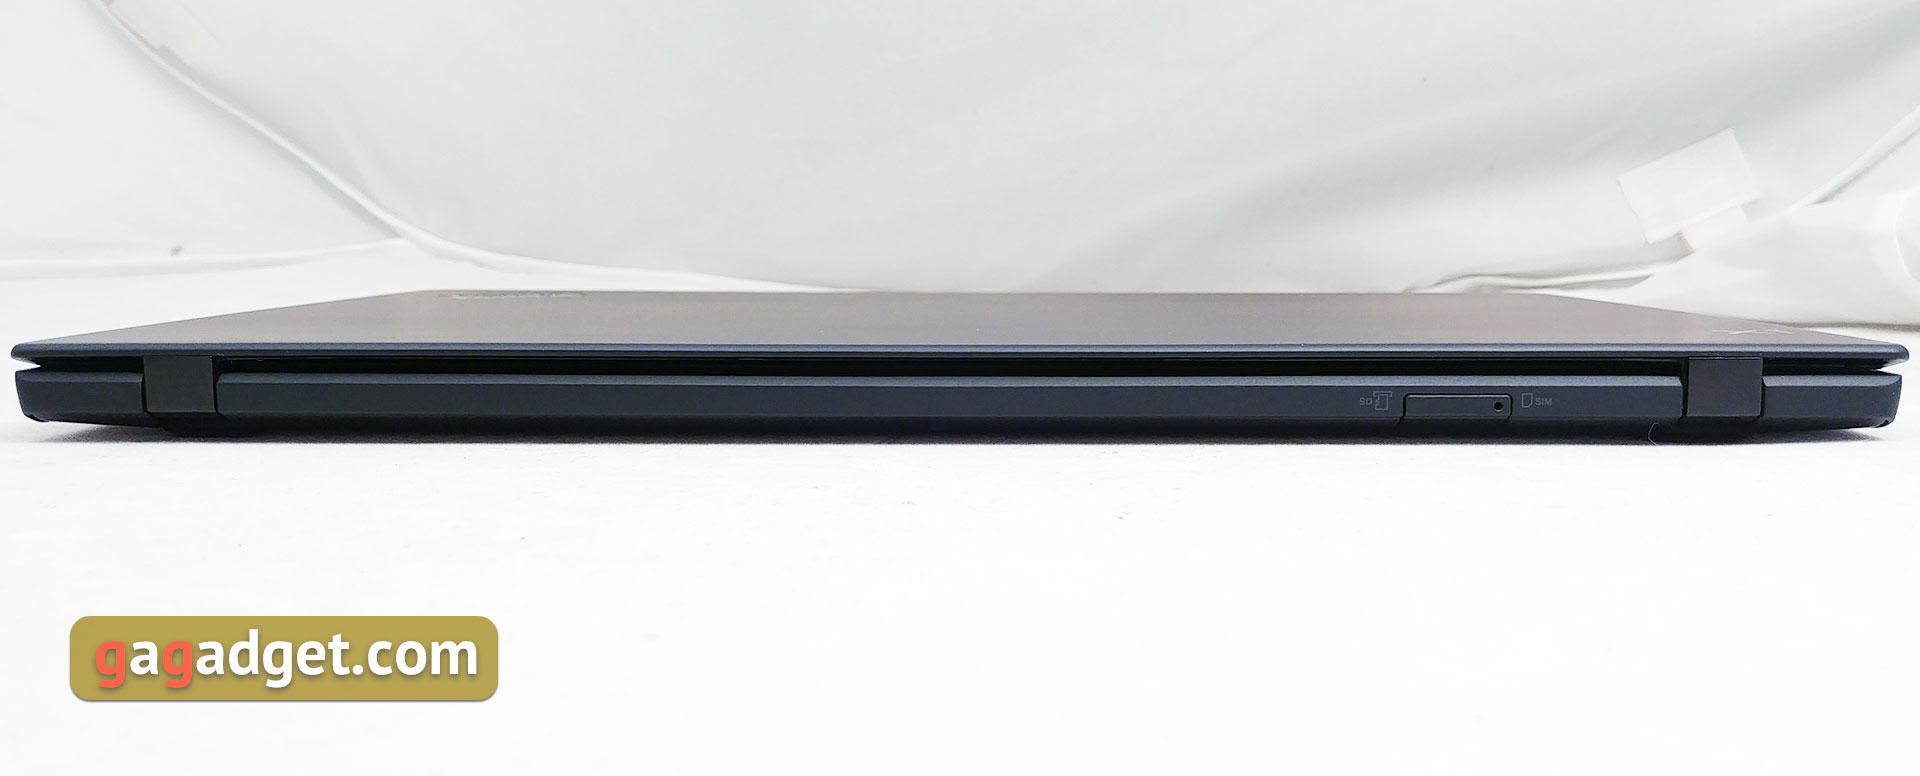 Обзор Lenovo ThinkPad X1 Carbon 6th Gen: топовый бизнес-ультрабук с HDR-экраном-8